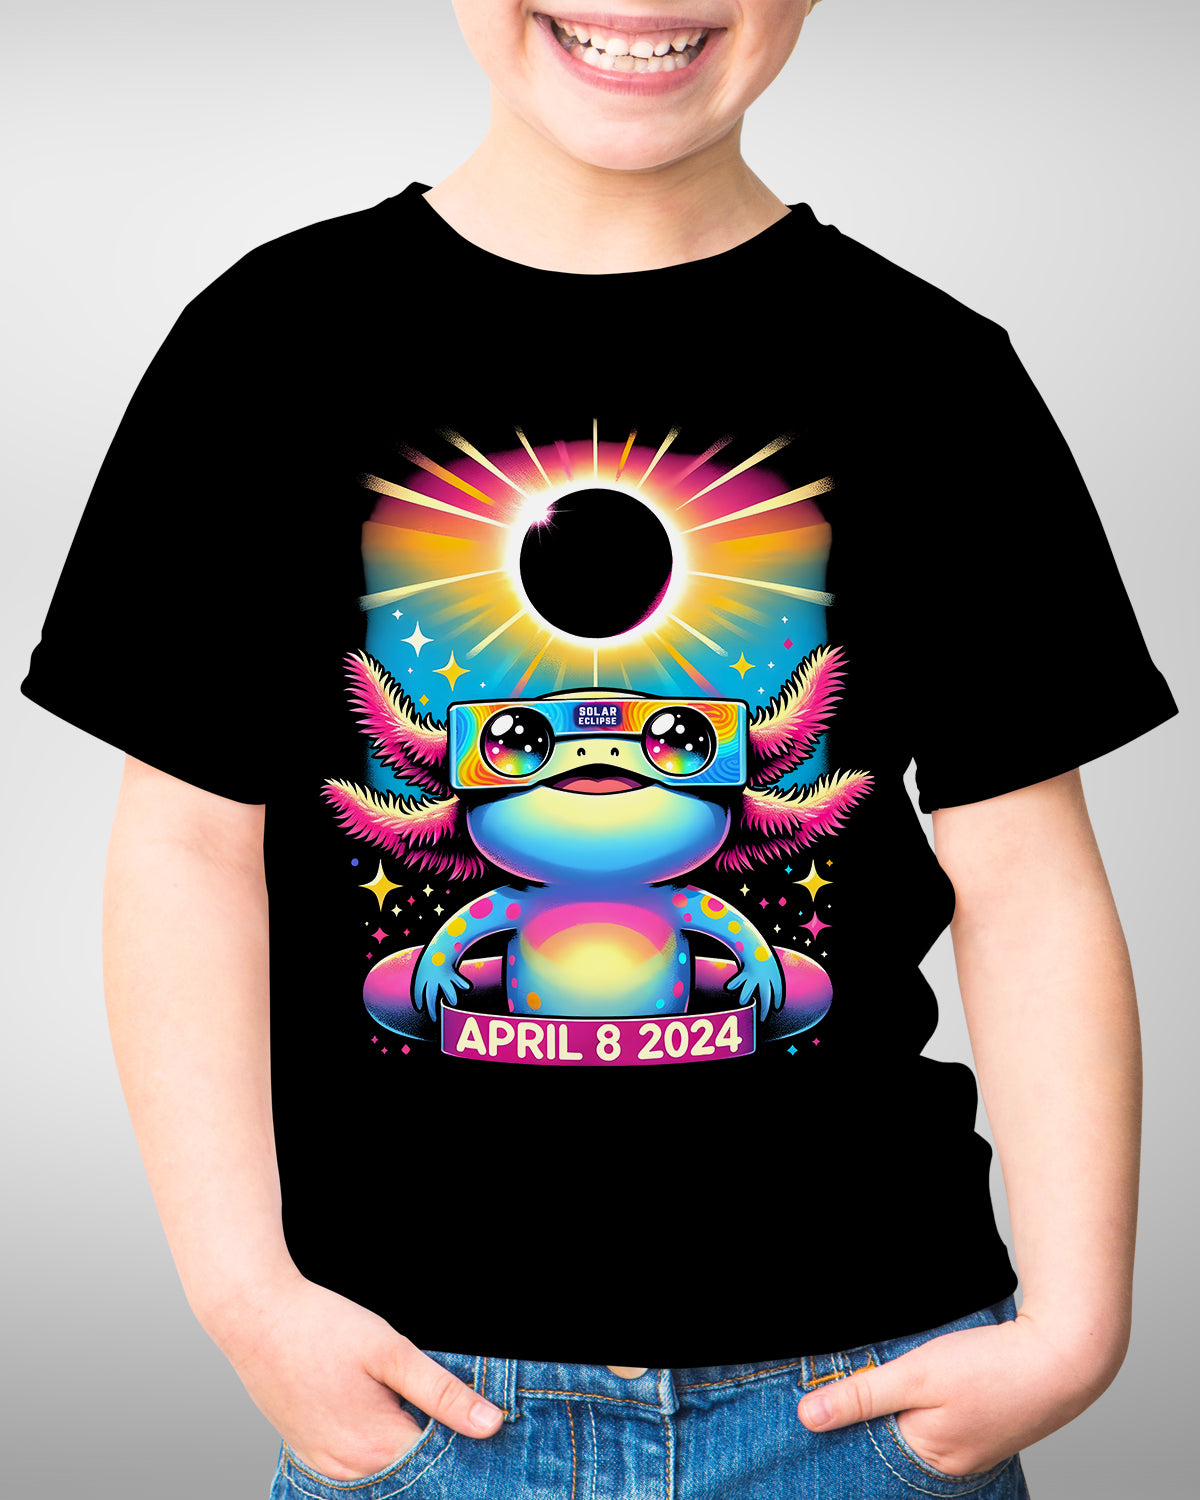 Kawaii Axolotl Solar Eclipse 2024 Shirt, Cute Mexican Salamander Wearing Eclipse Glasses, Colorful April 8 Souvenir Gift